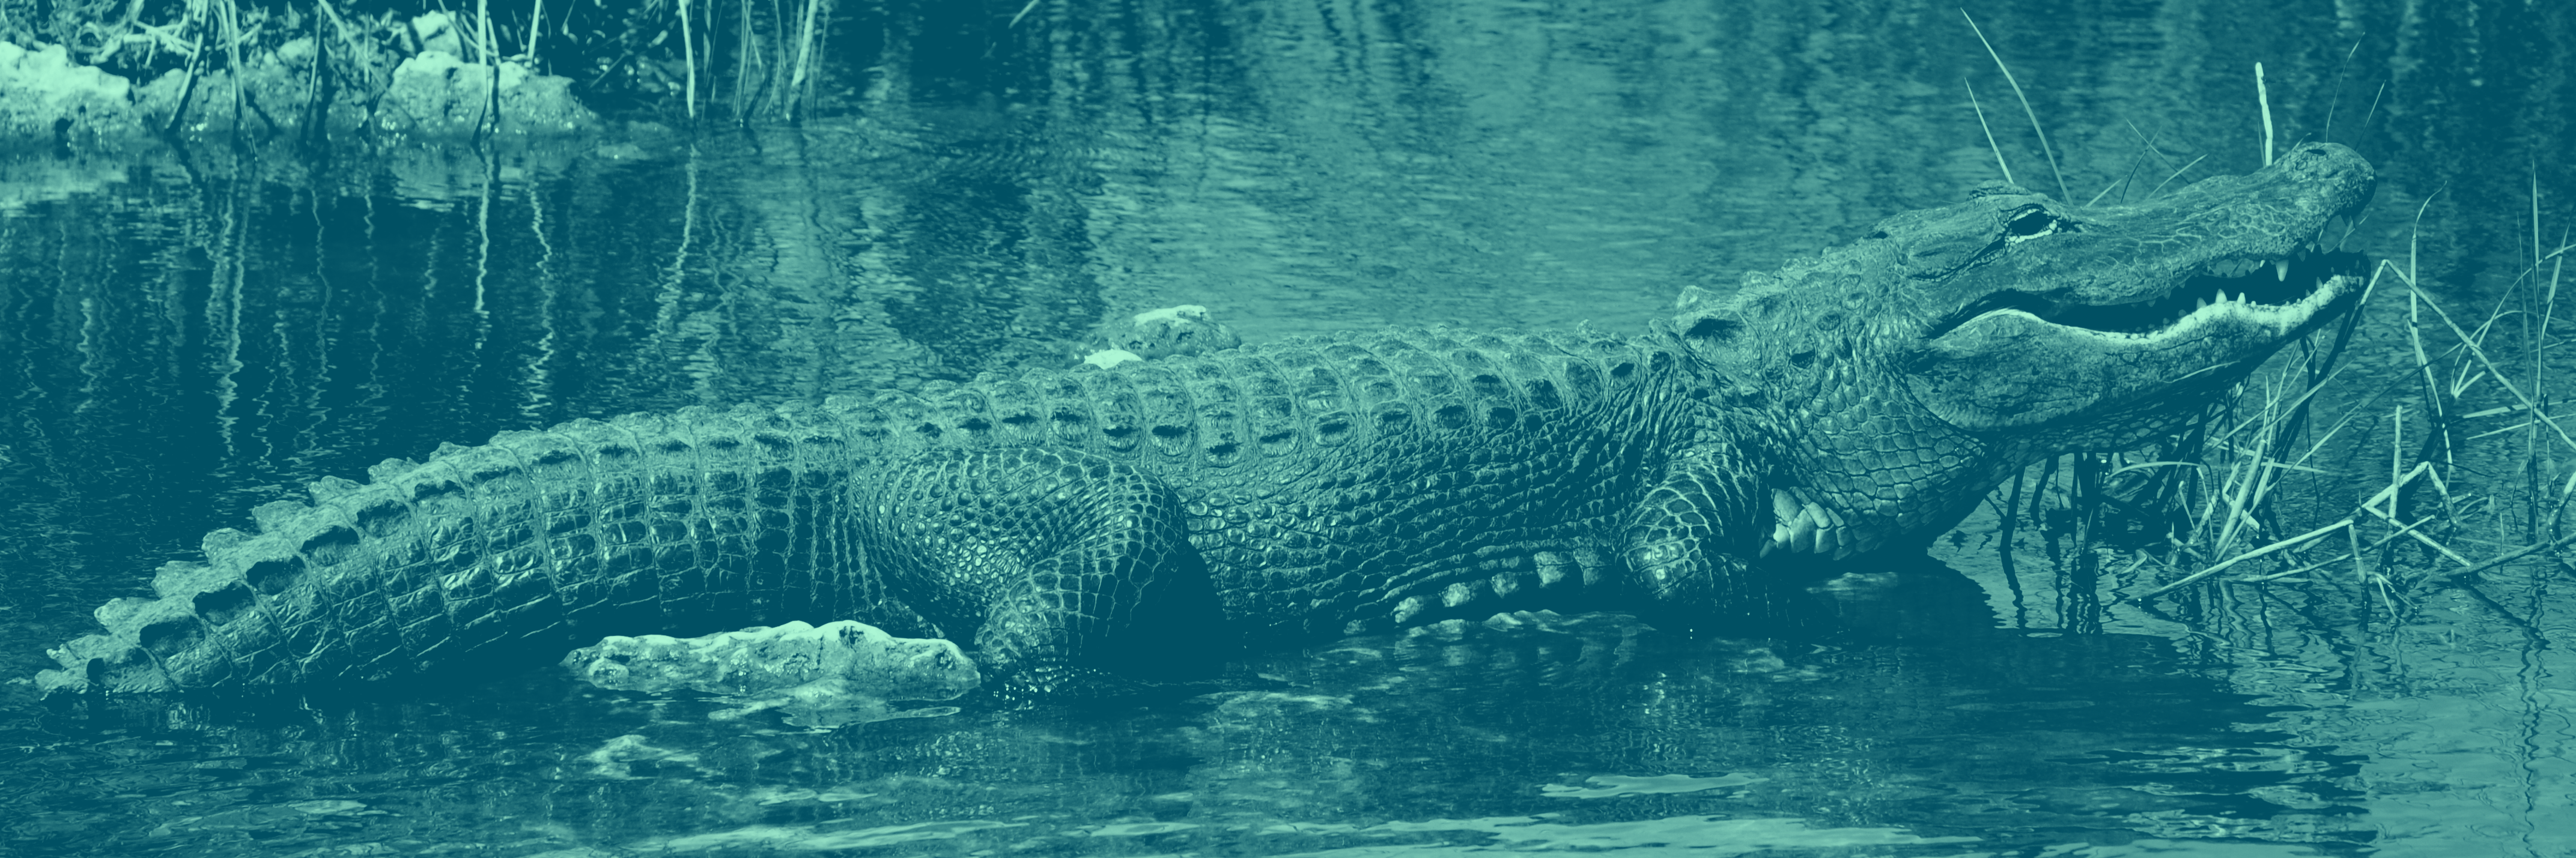 alligator vs crocodile